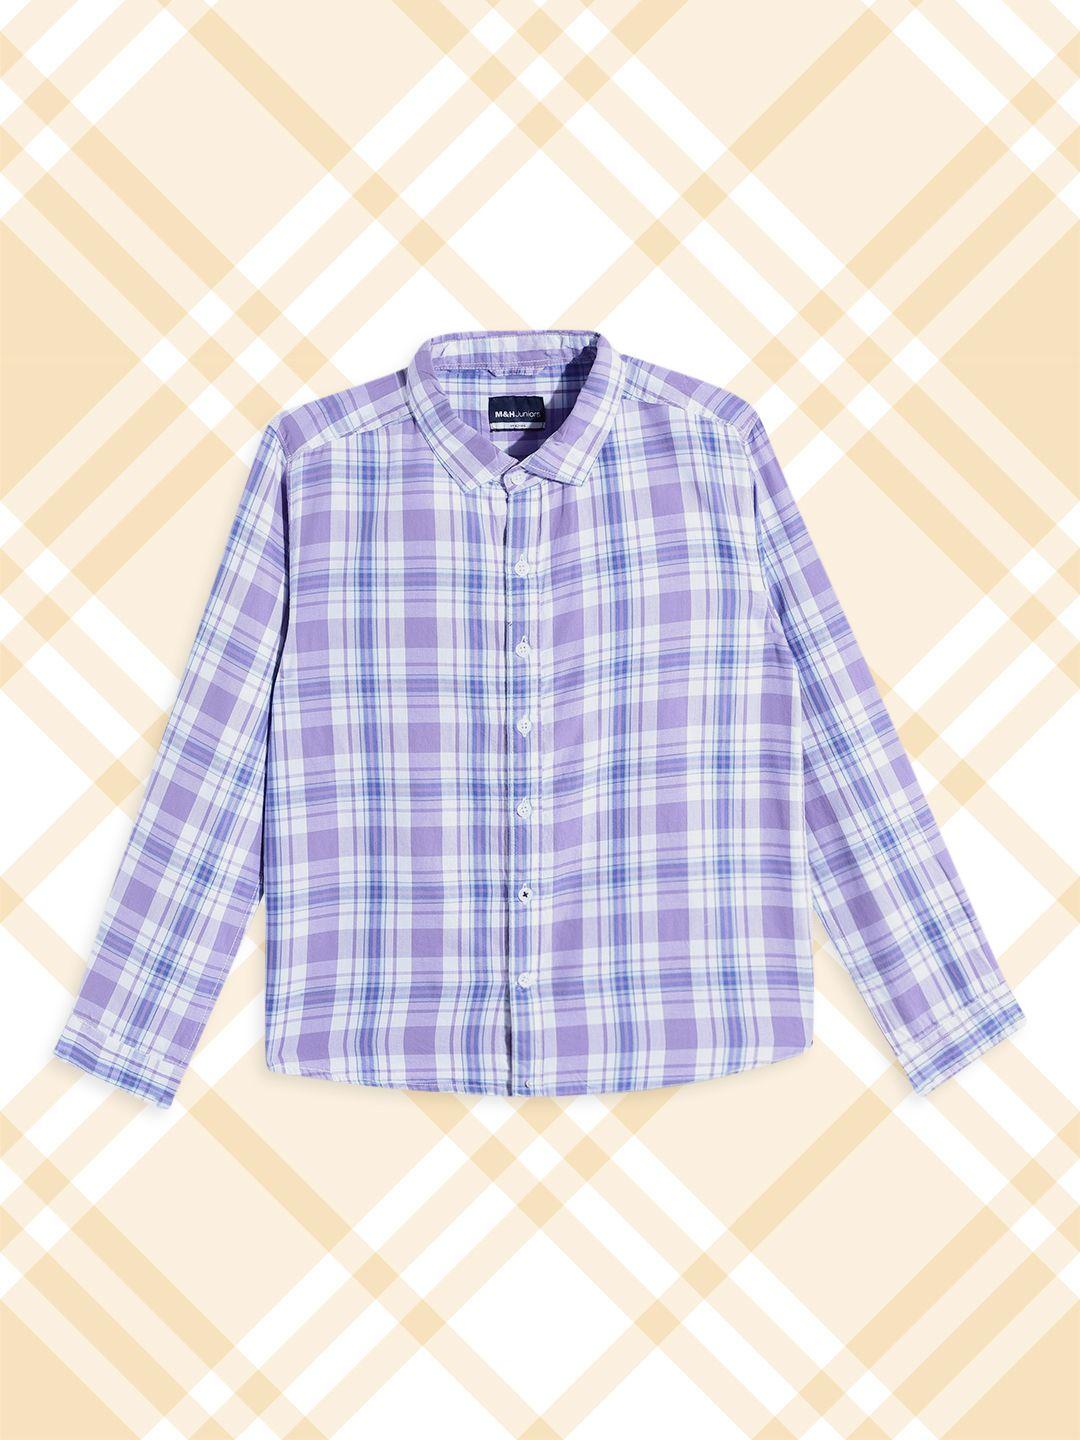 m&h juniors boys lavender & white tartan checked pure cotton casual shirt